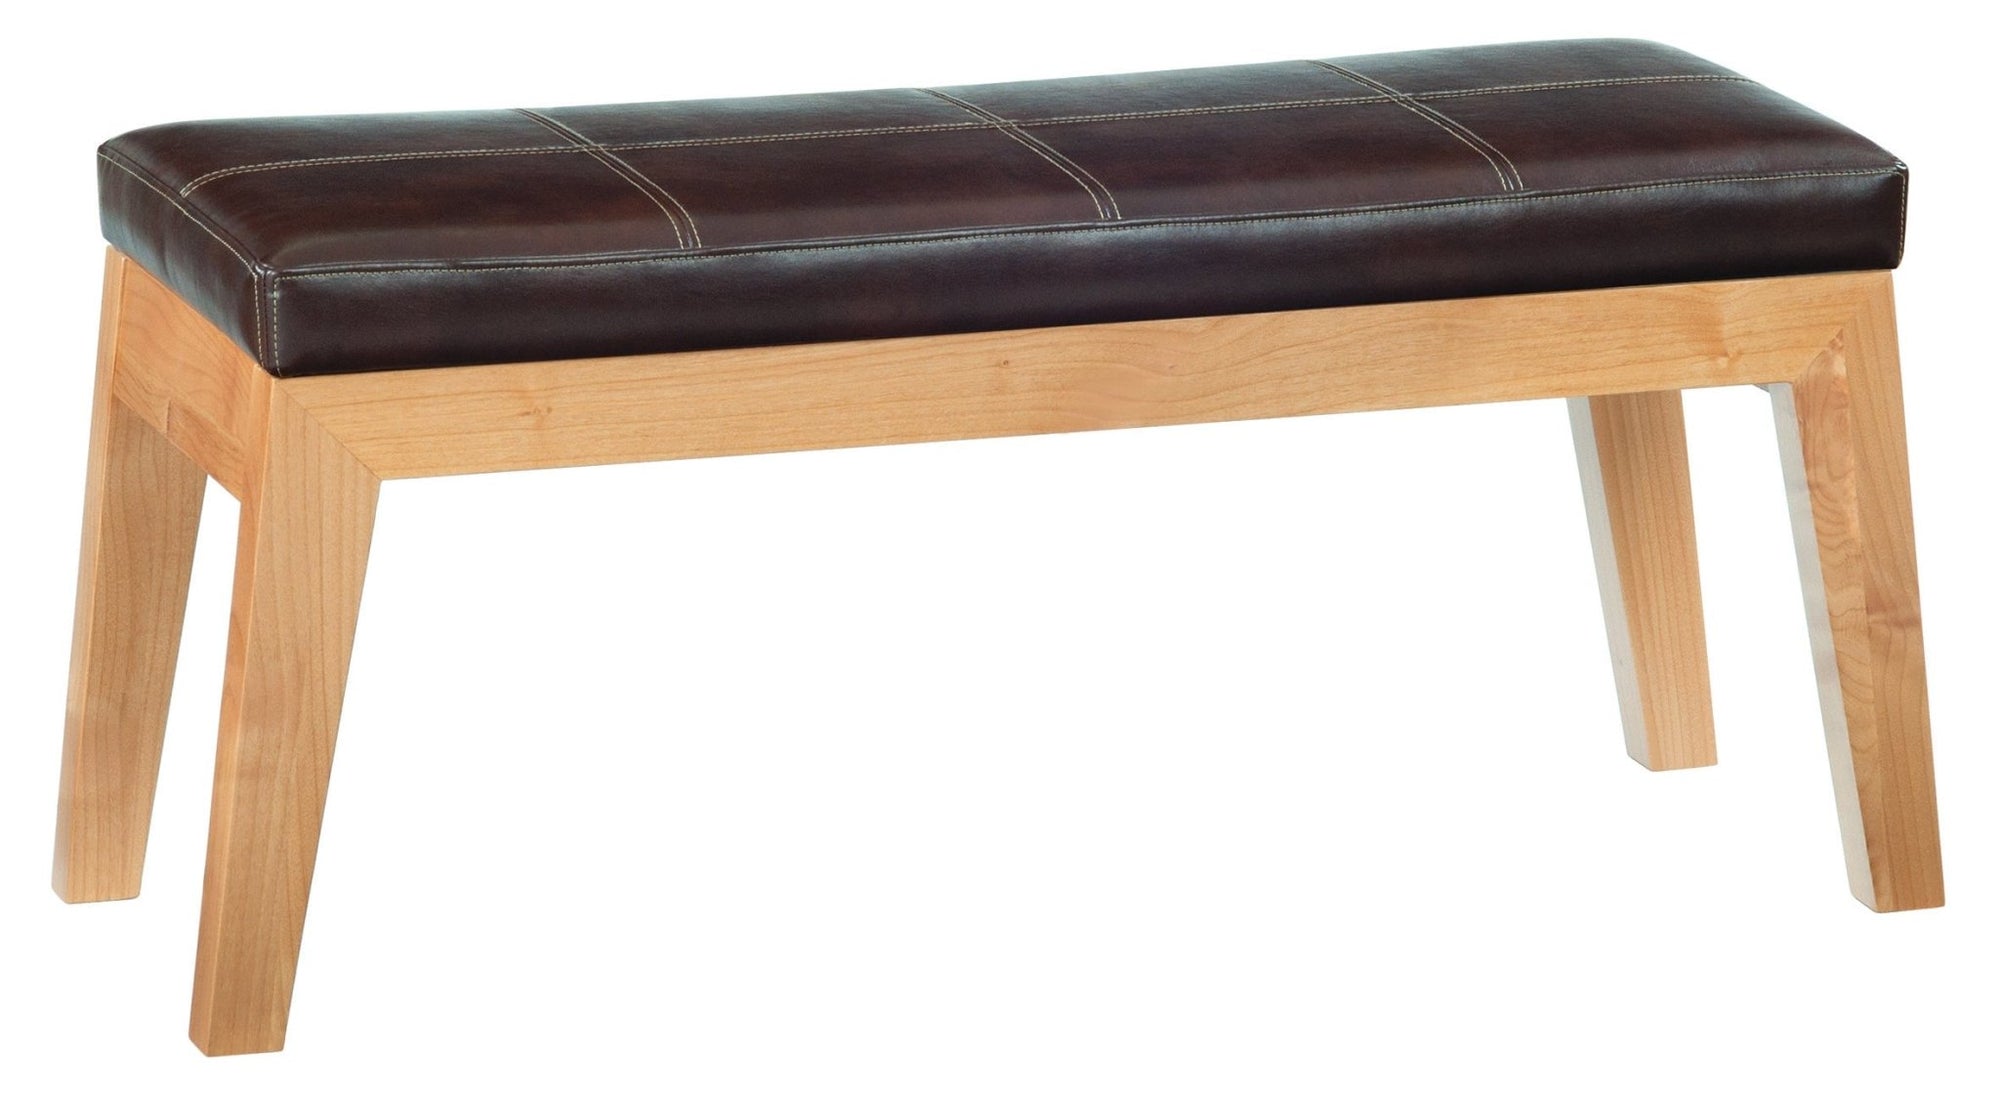 Addison Upholstered Bench - Baconco